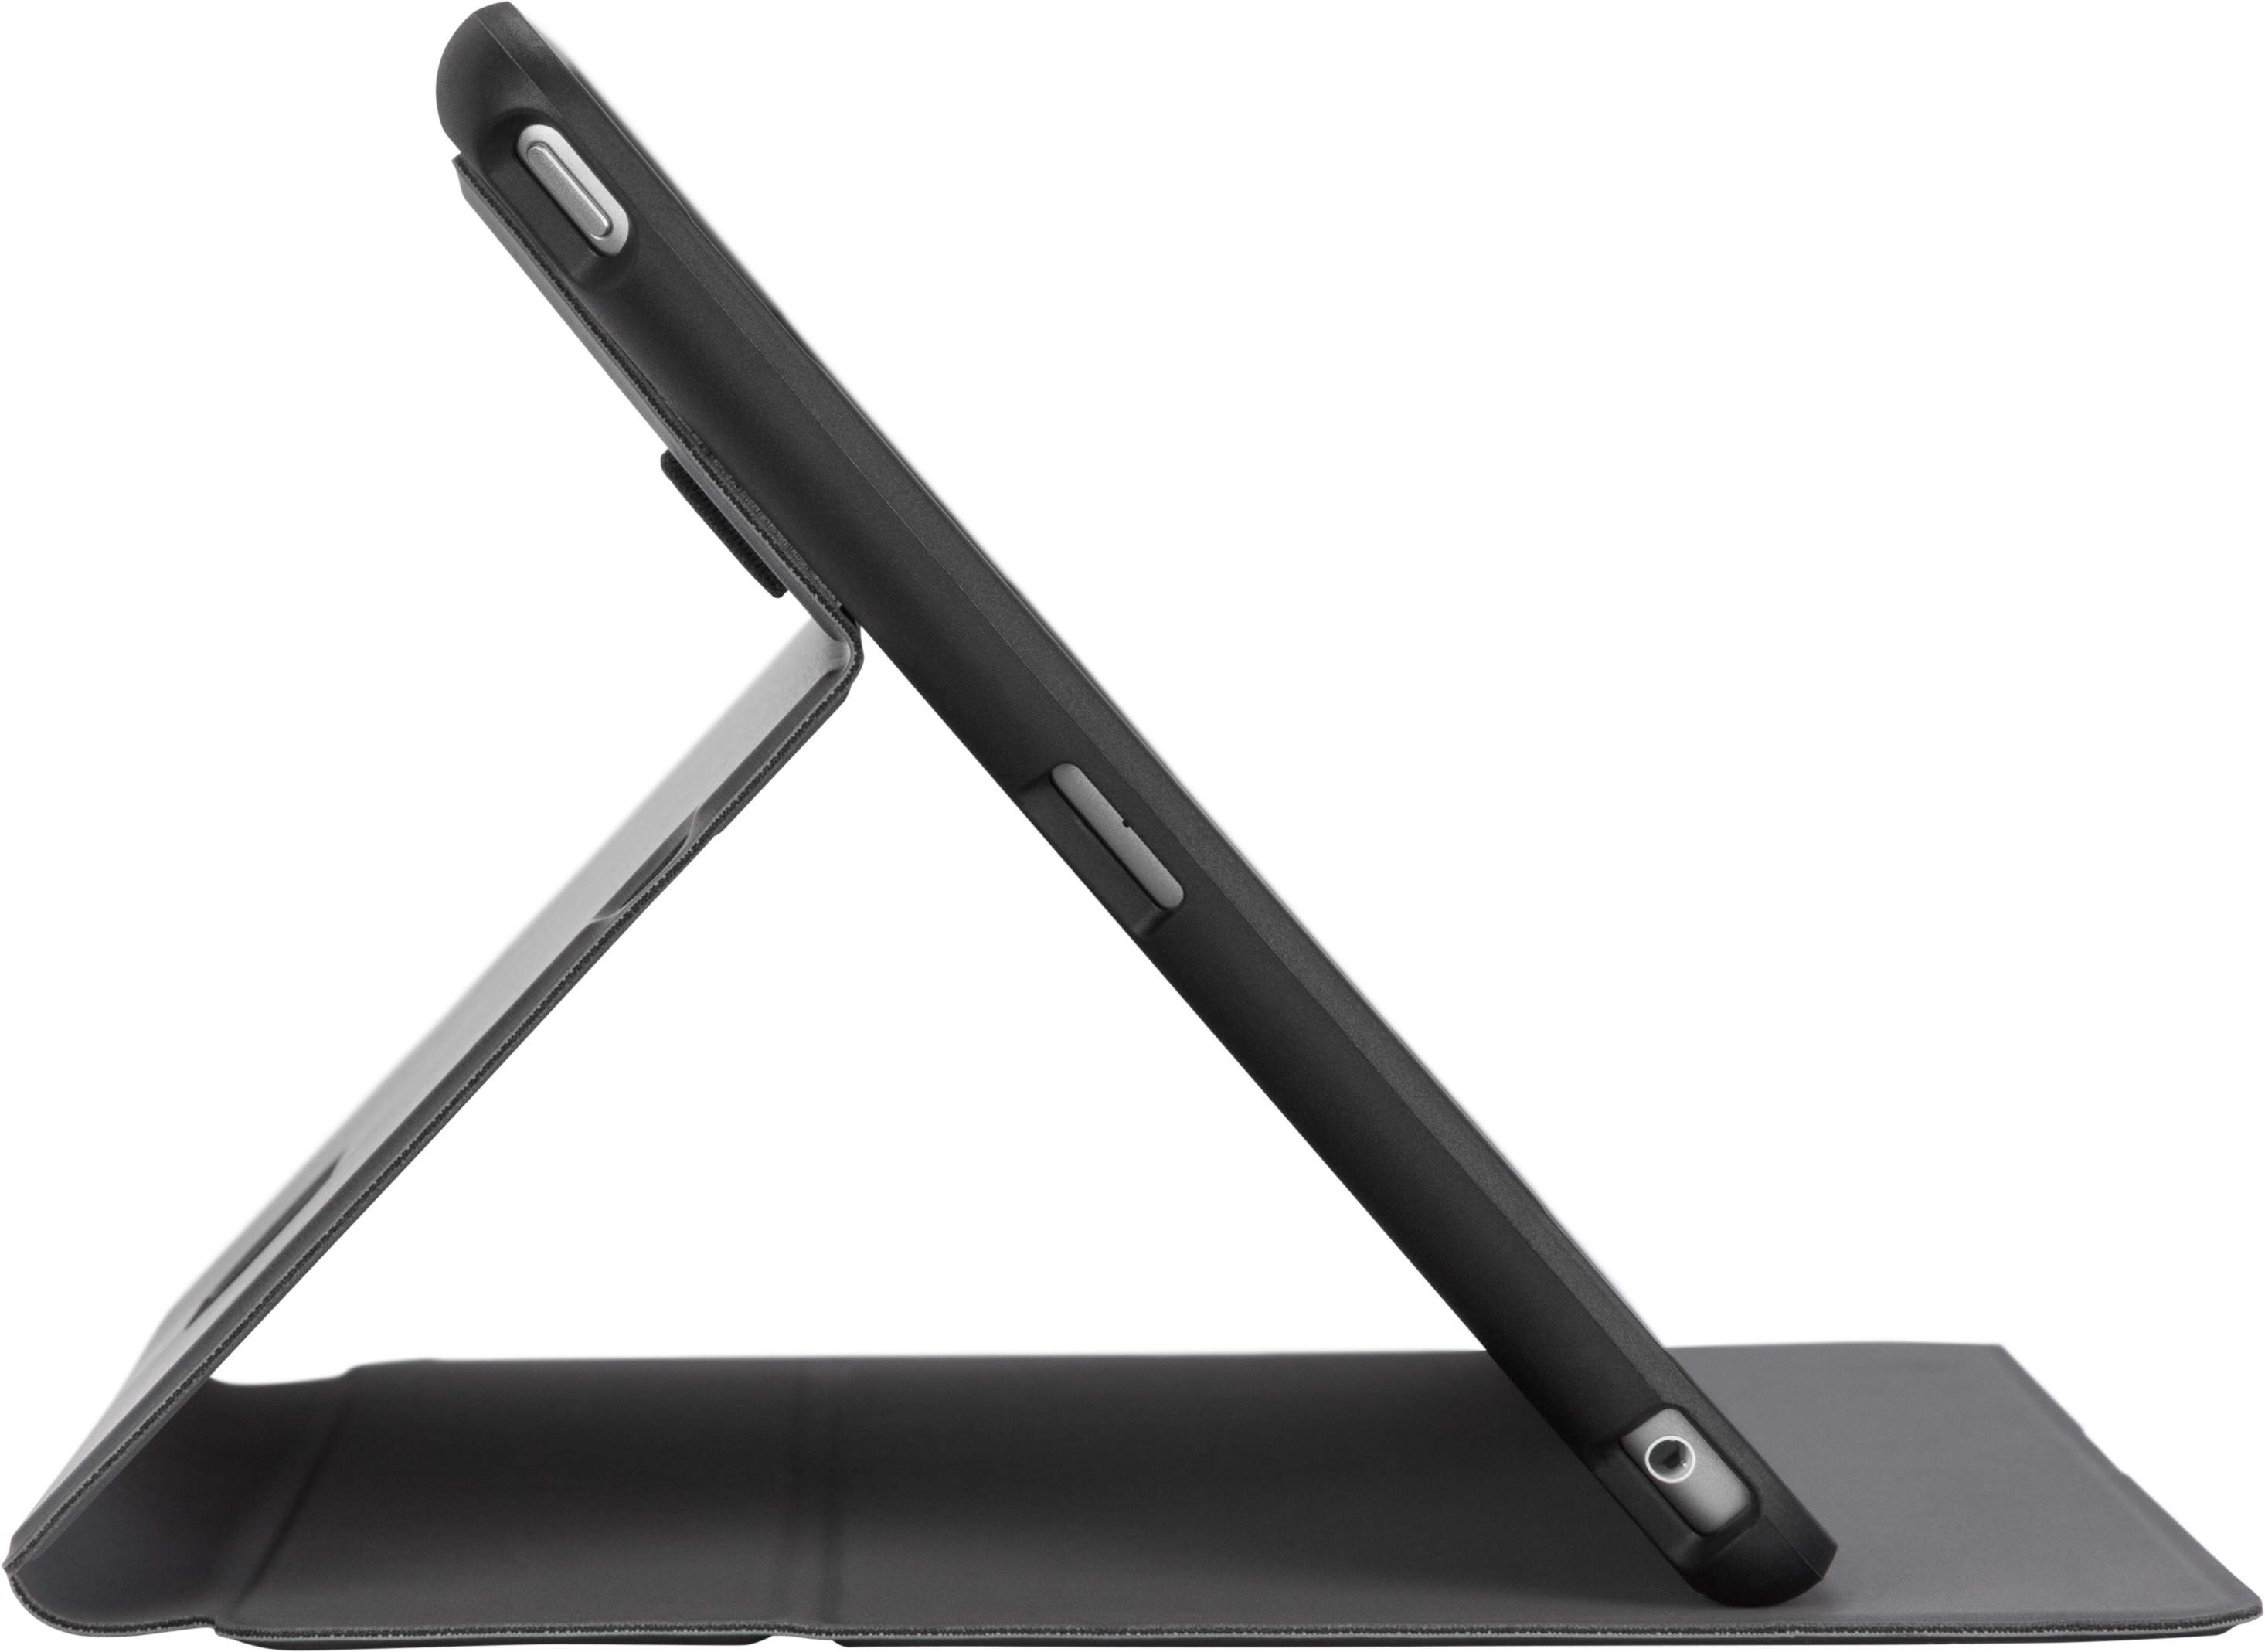 TARGUS Click-In Case iPad for 10.2 THZ850GL iPad Air + Pro 10.5, black